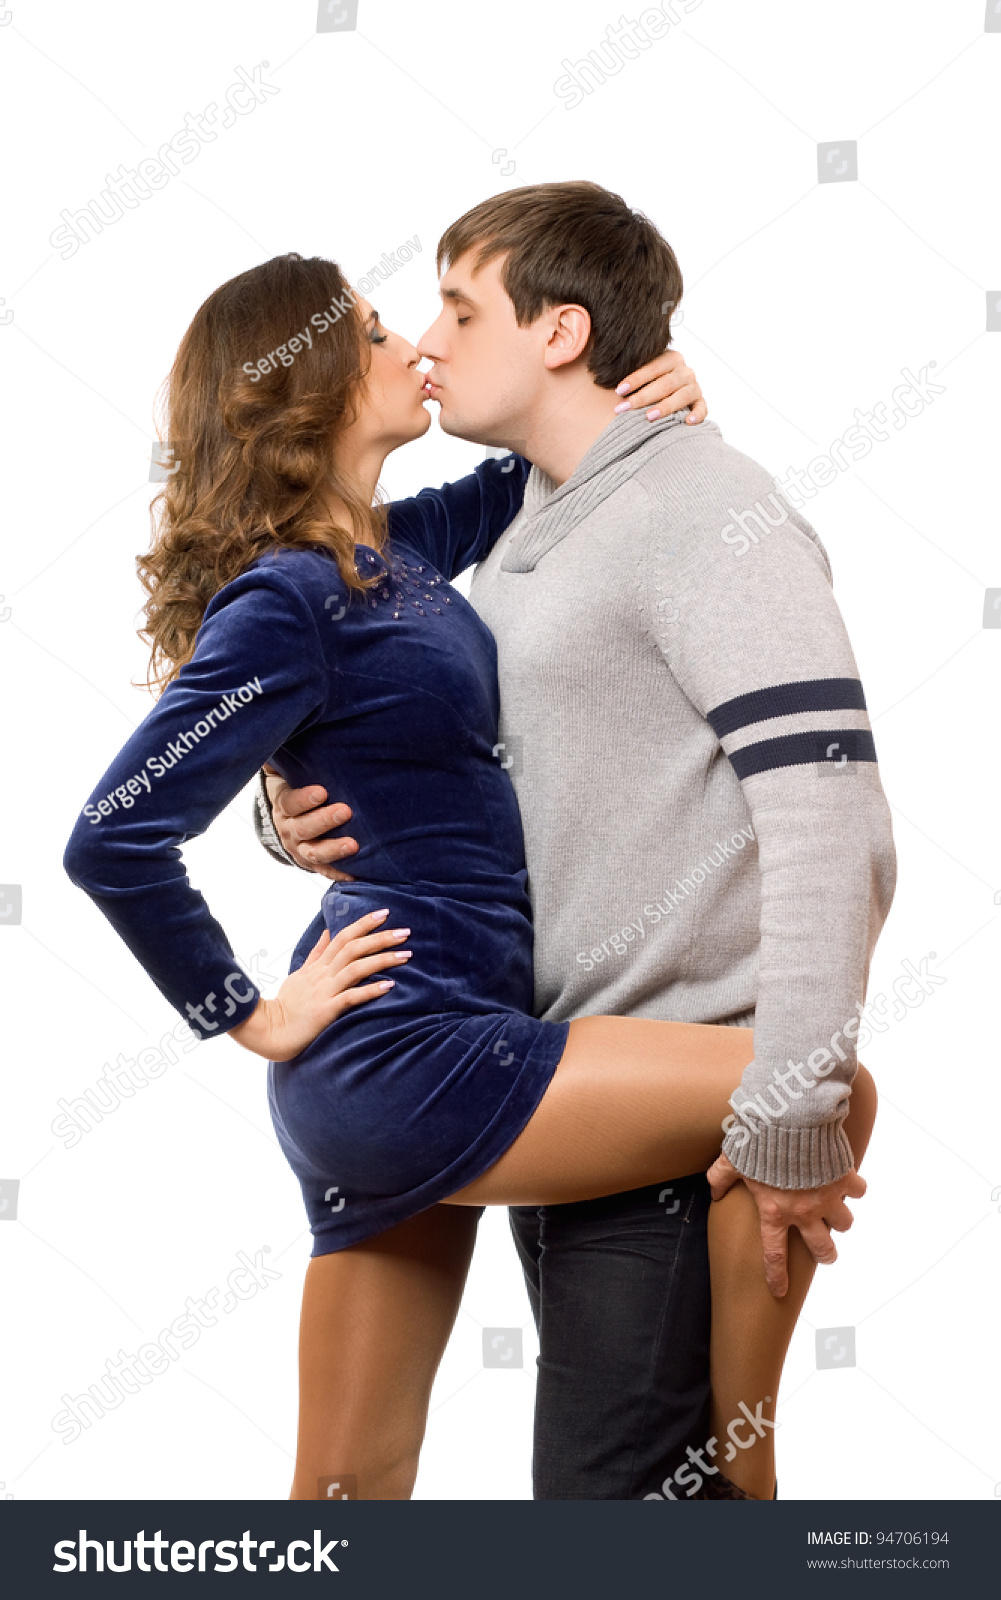 Boy and girl sexy kiss